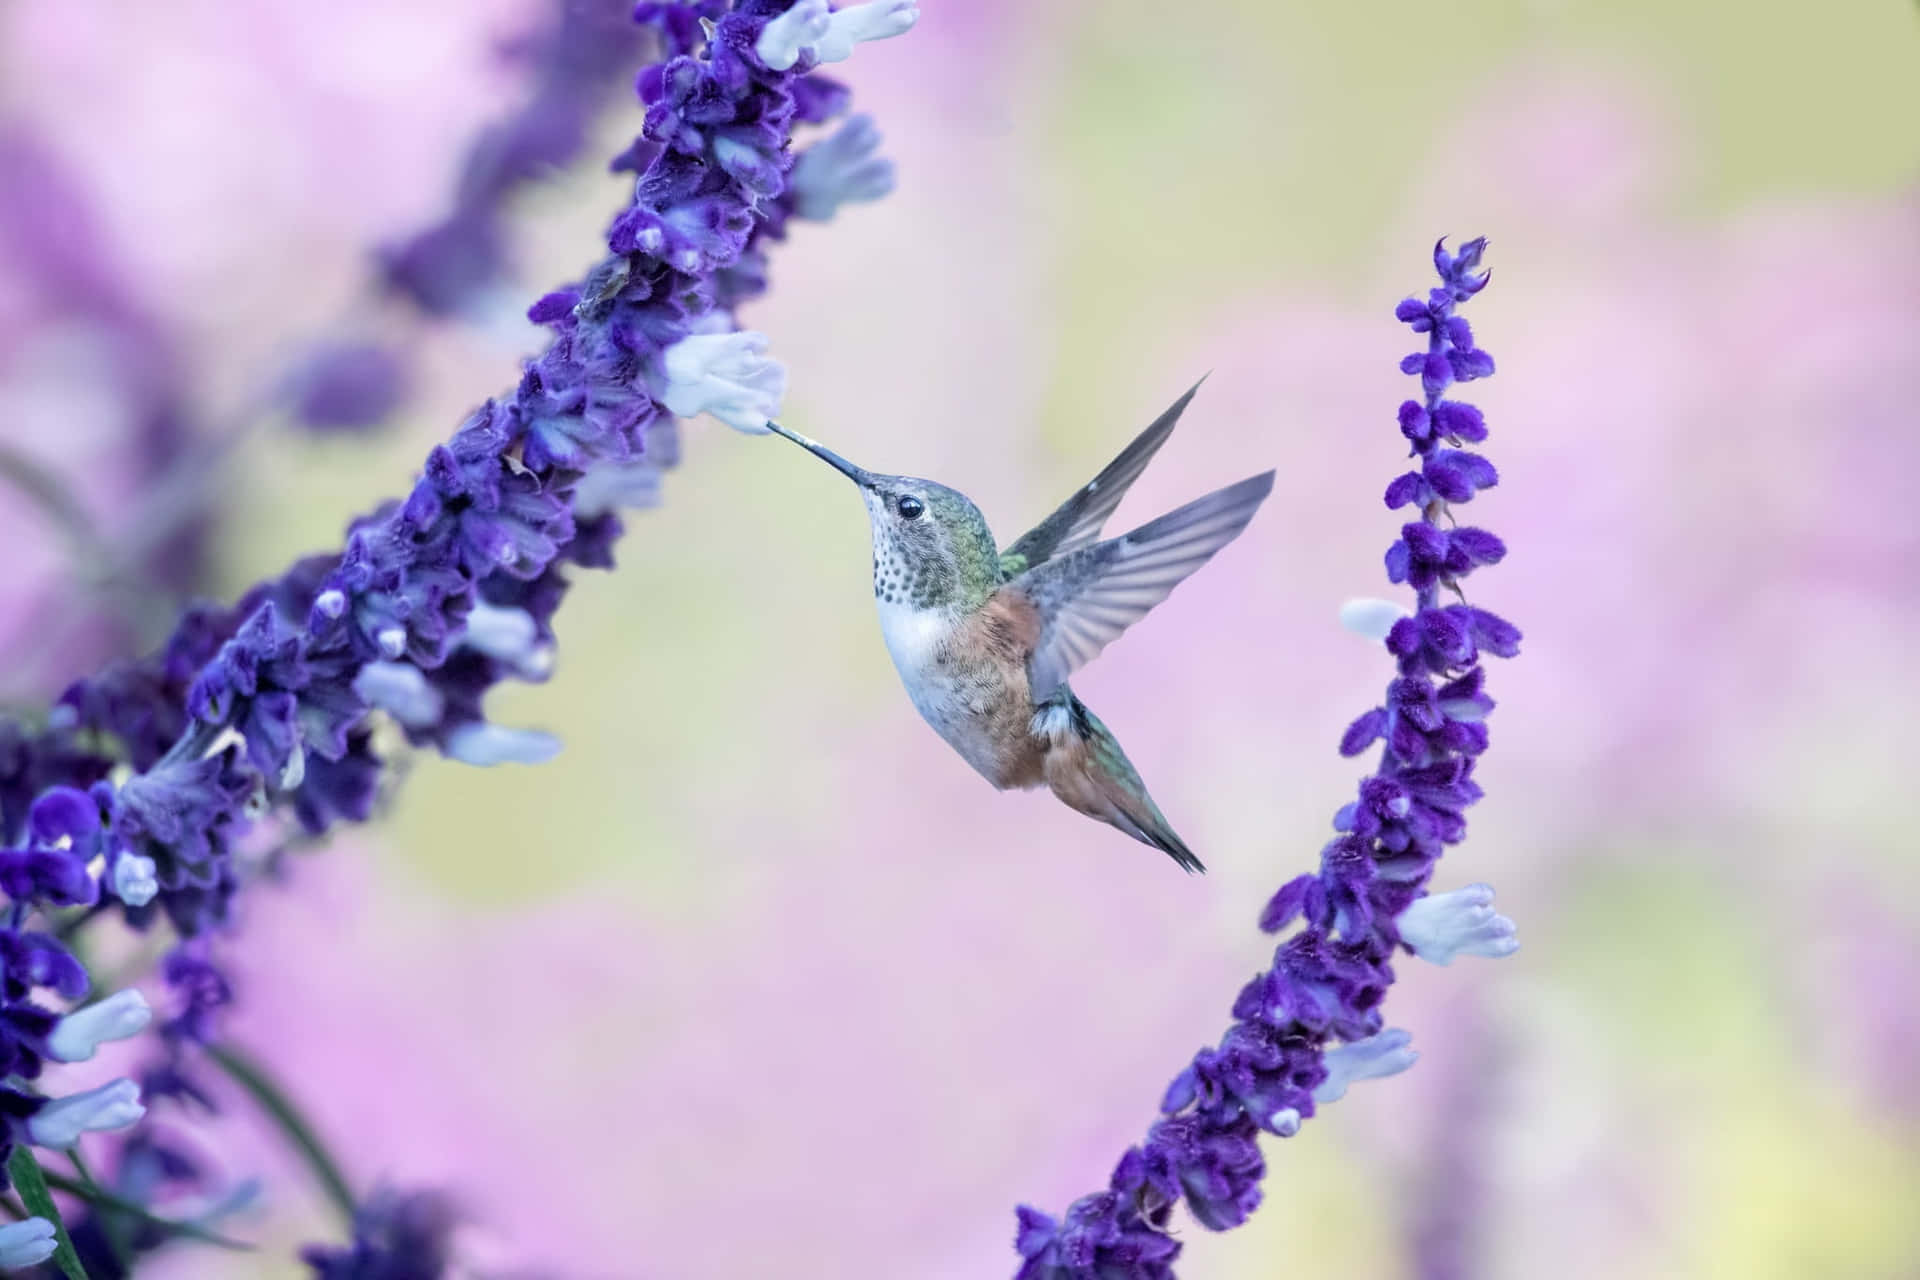 A female hummingbird flutters into frame